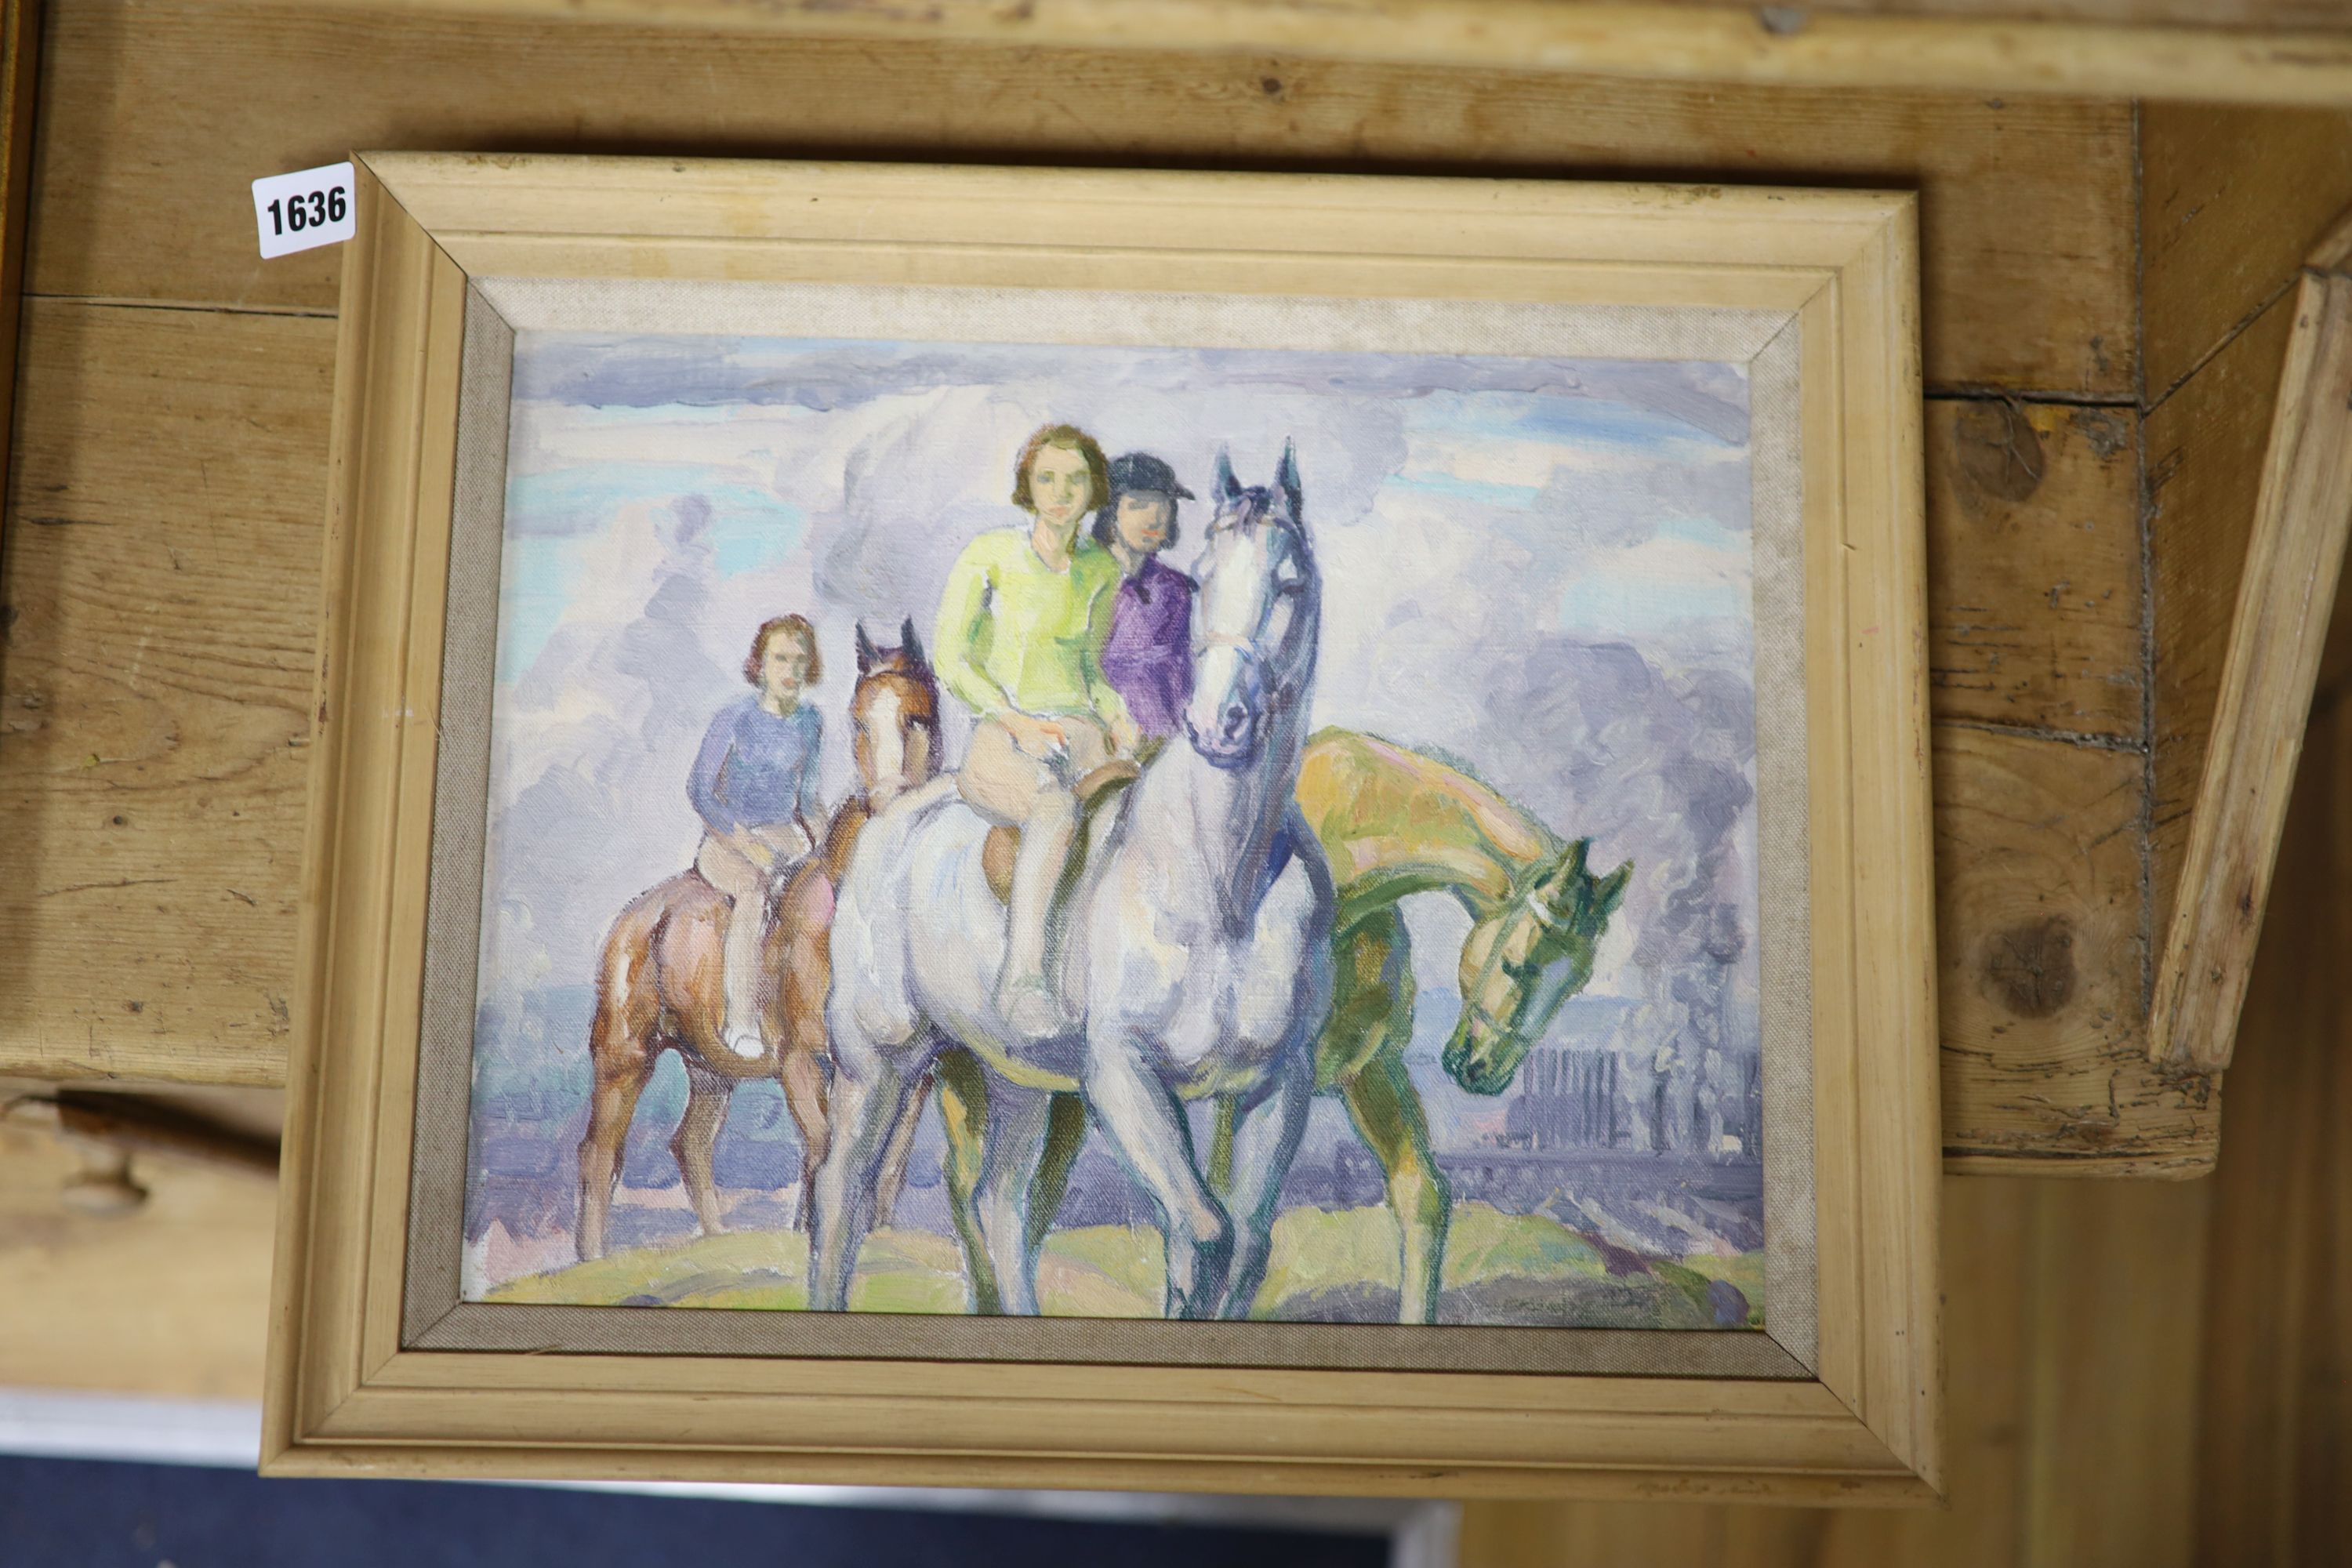 Harold Dearden (1888-1962), oil on canvas, Sketch of women riding horses, 27 x 34cm